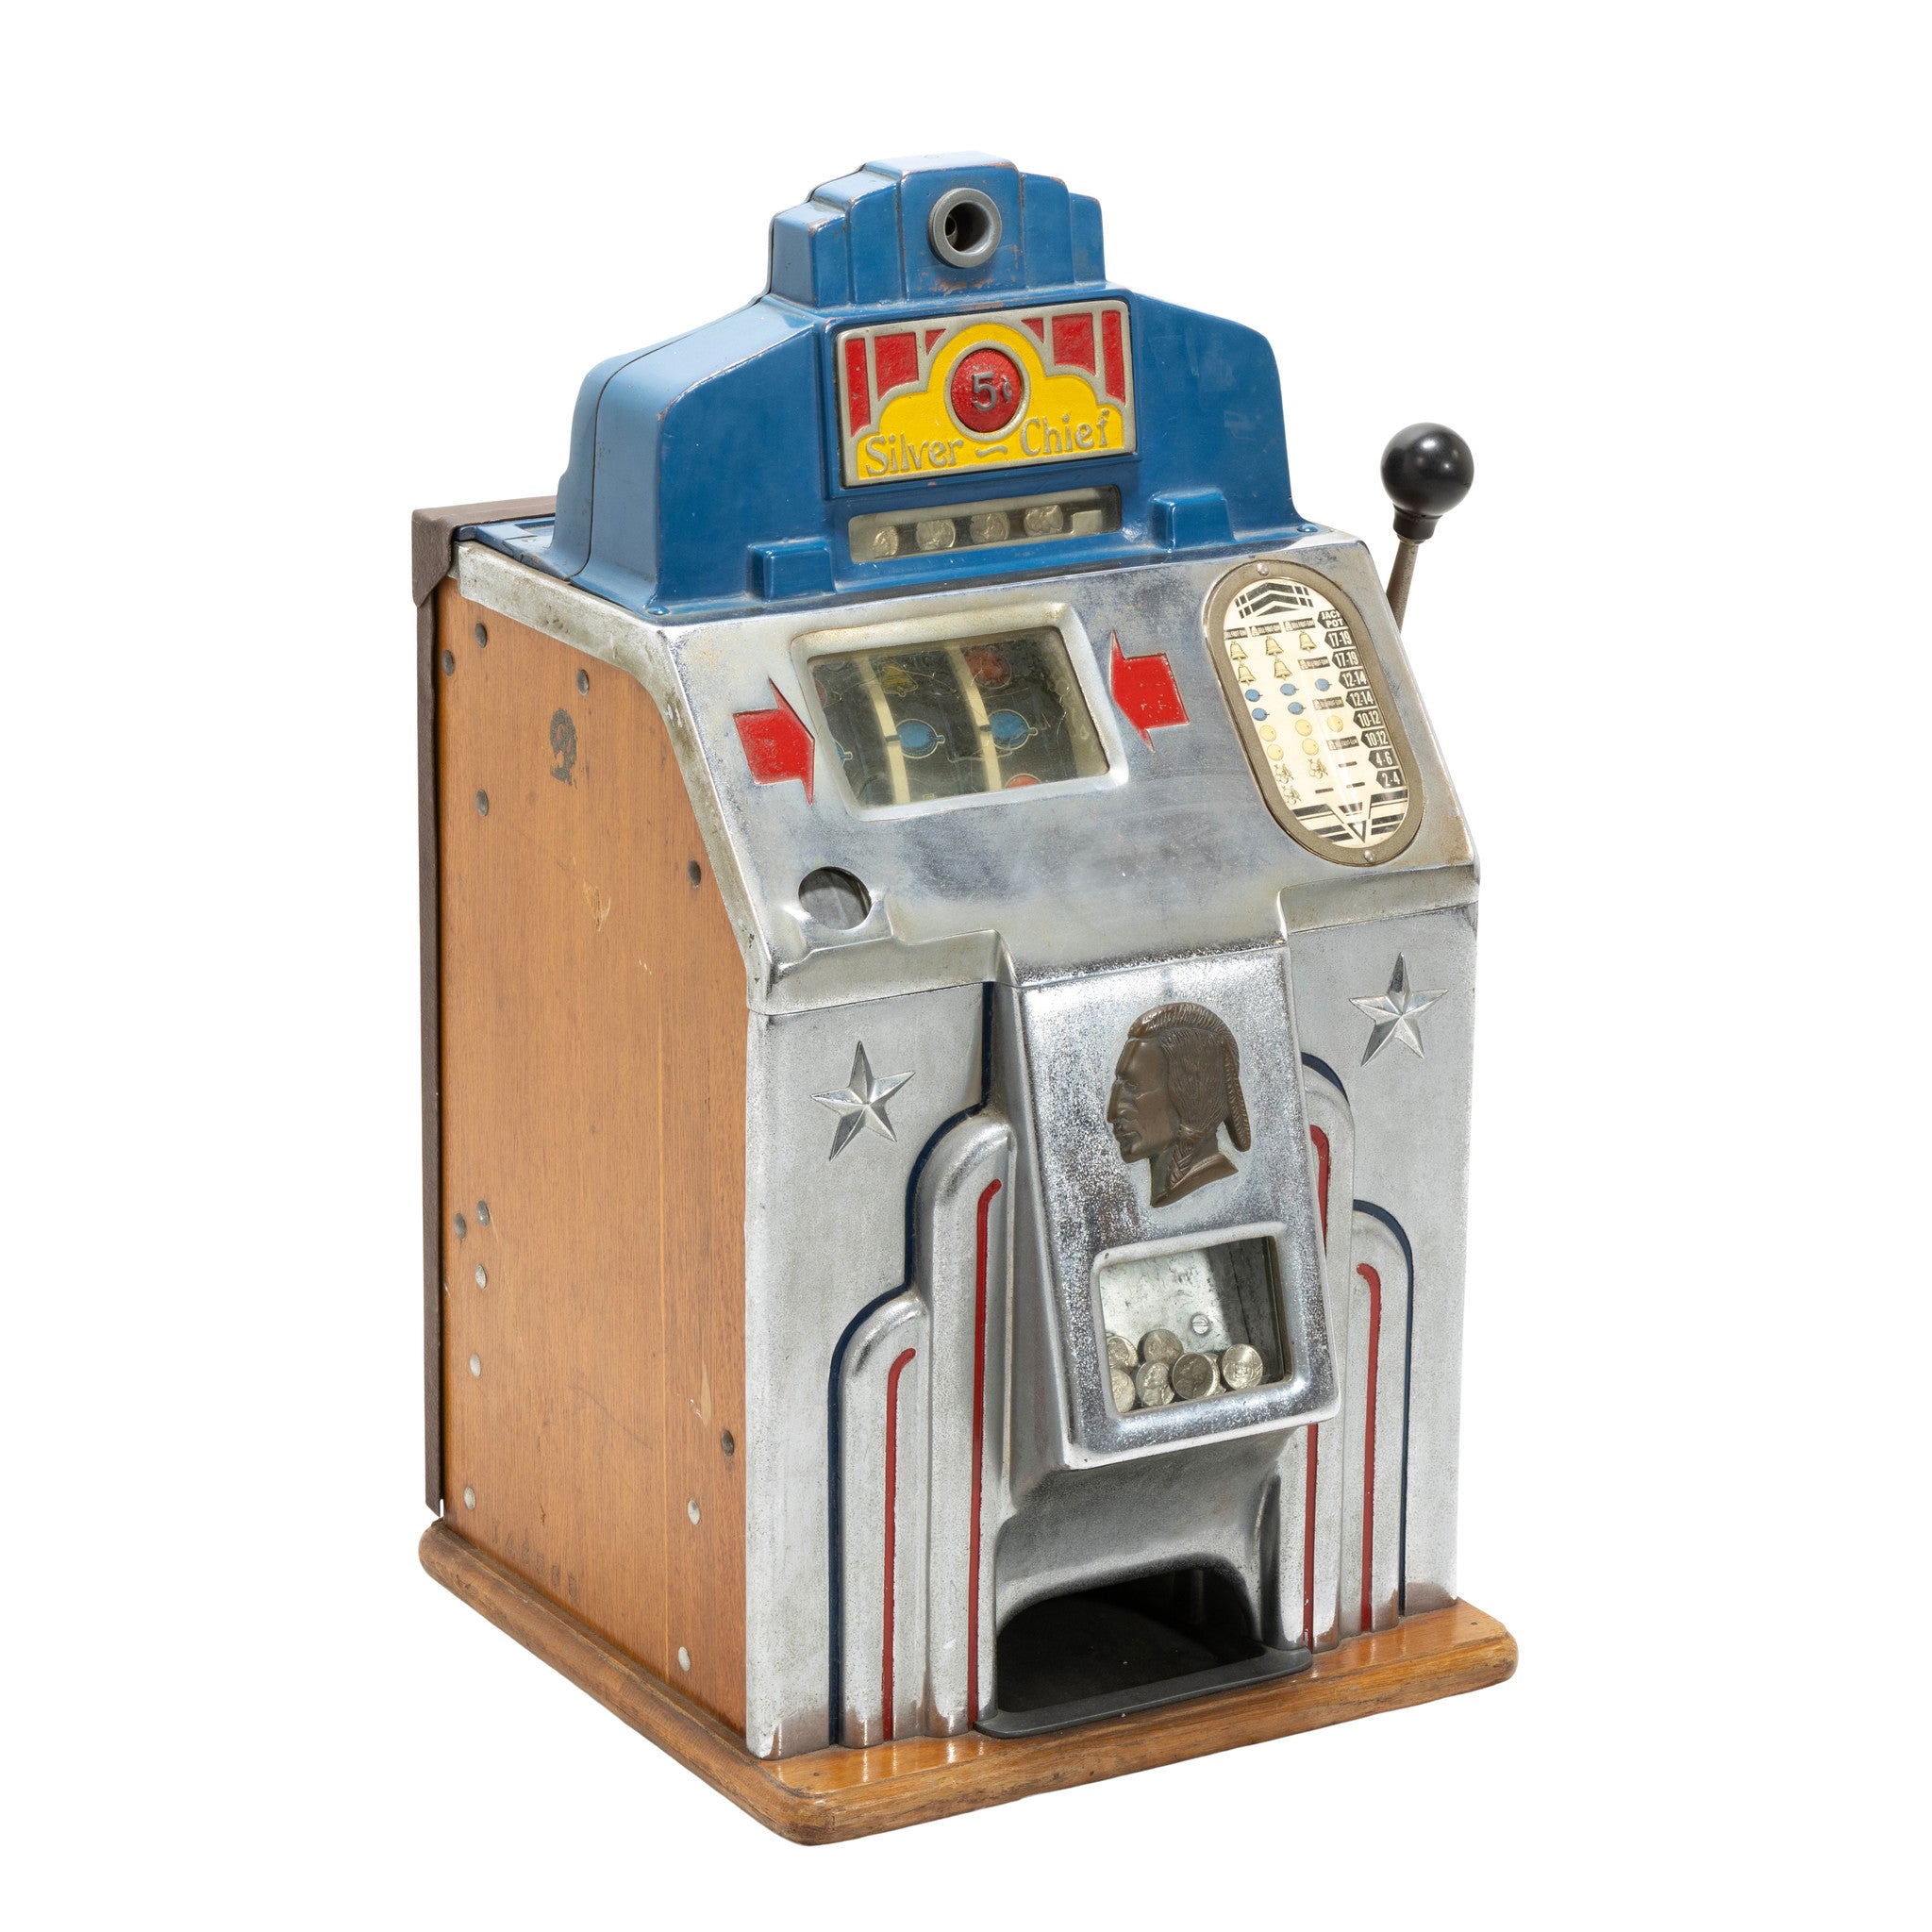 Jennings 5 Cent Silver Chief Slot Machine